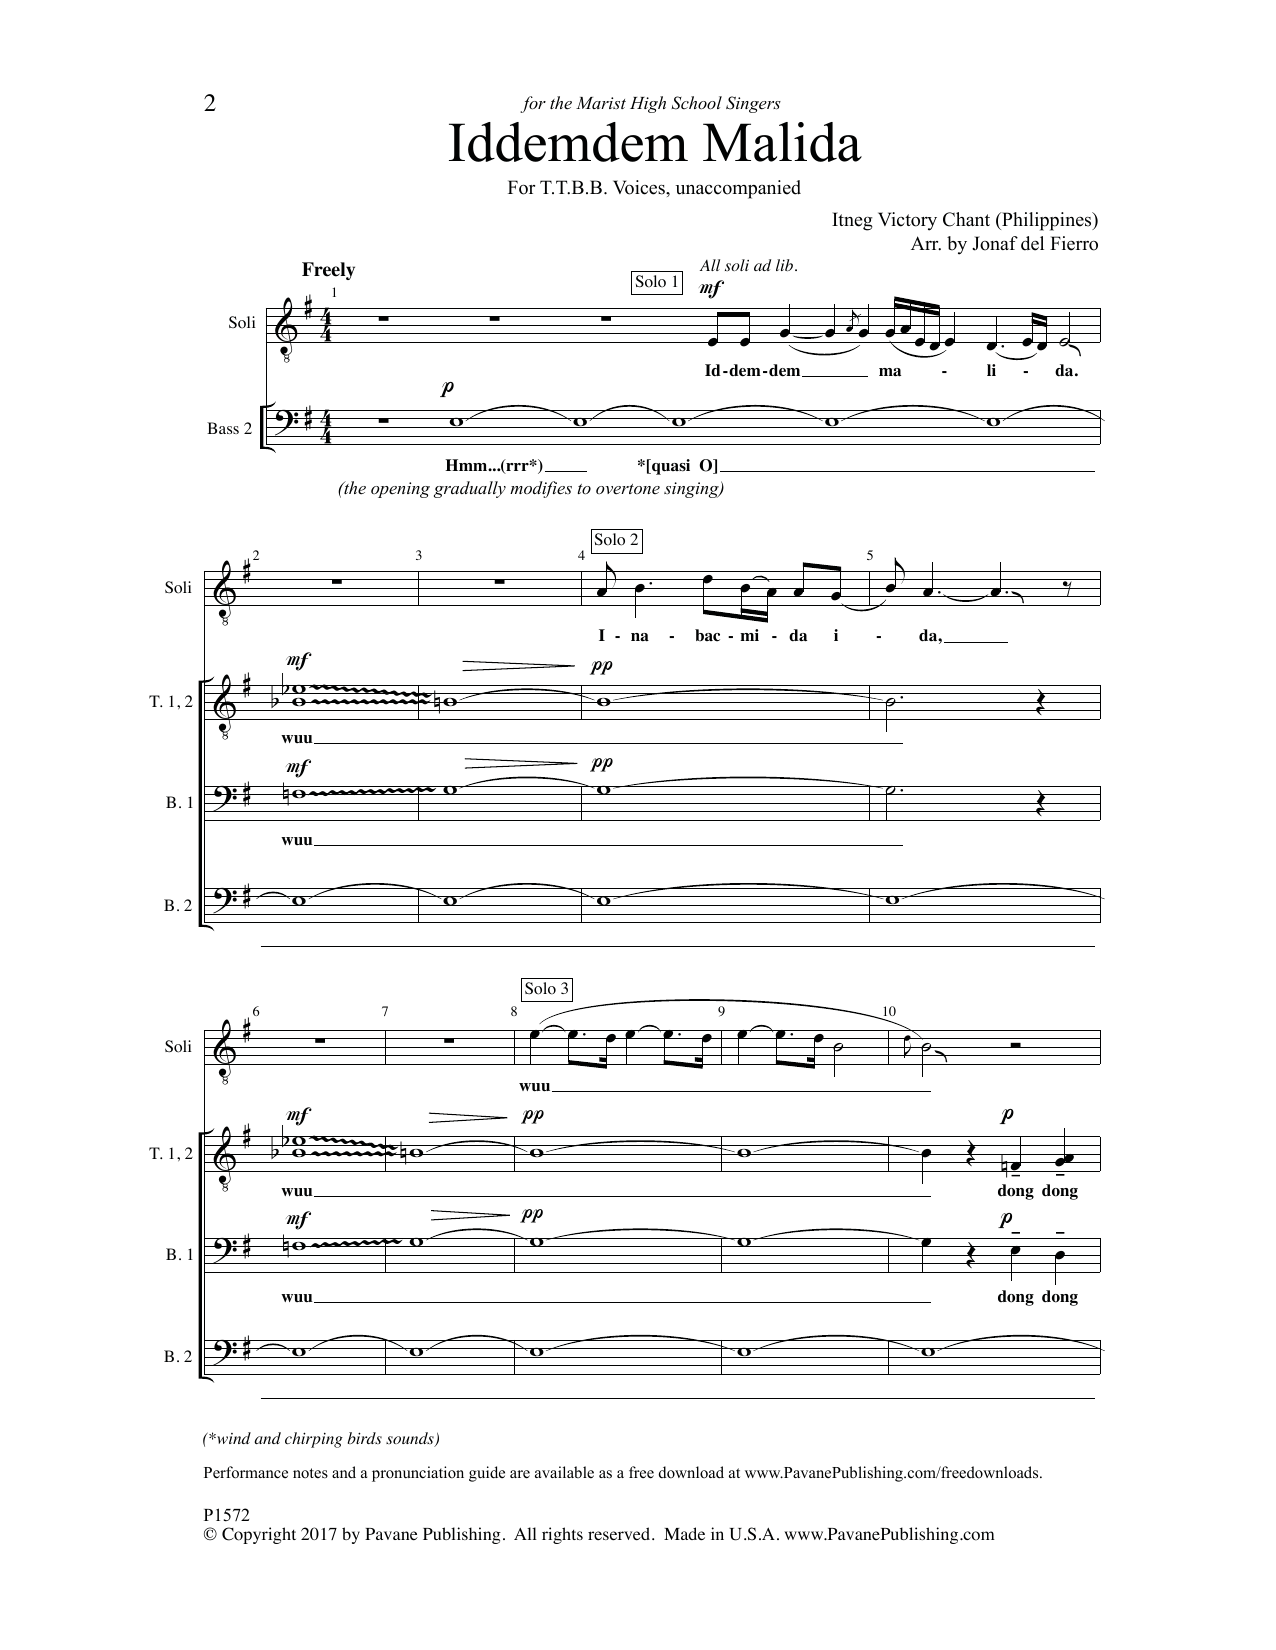 Jonaf del Fierro Iddemdem Malida Sheet Music Notes & Chords for Choral - Download or Print PDF